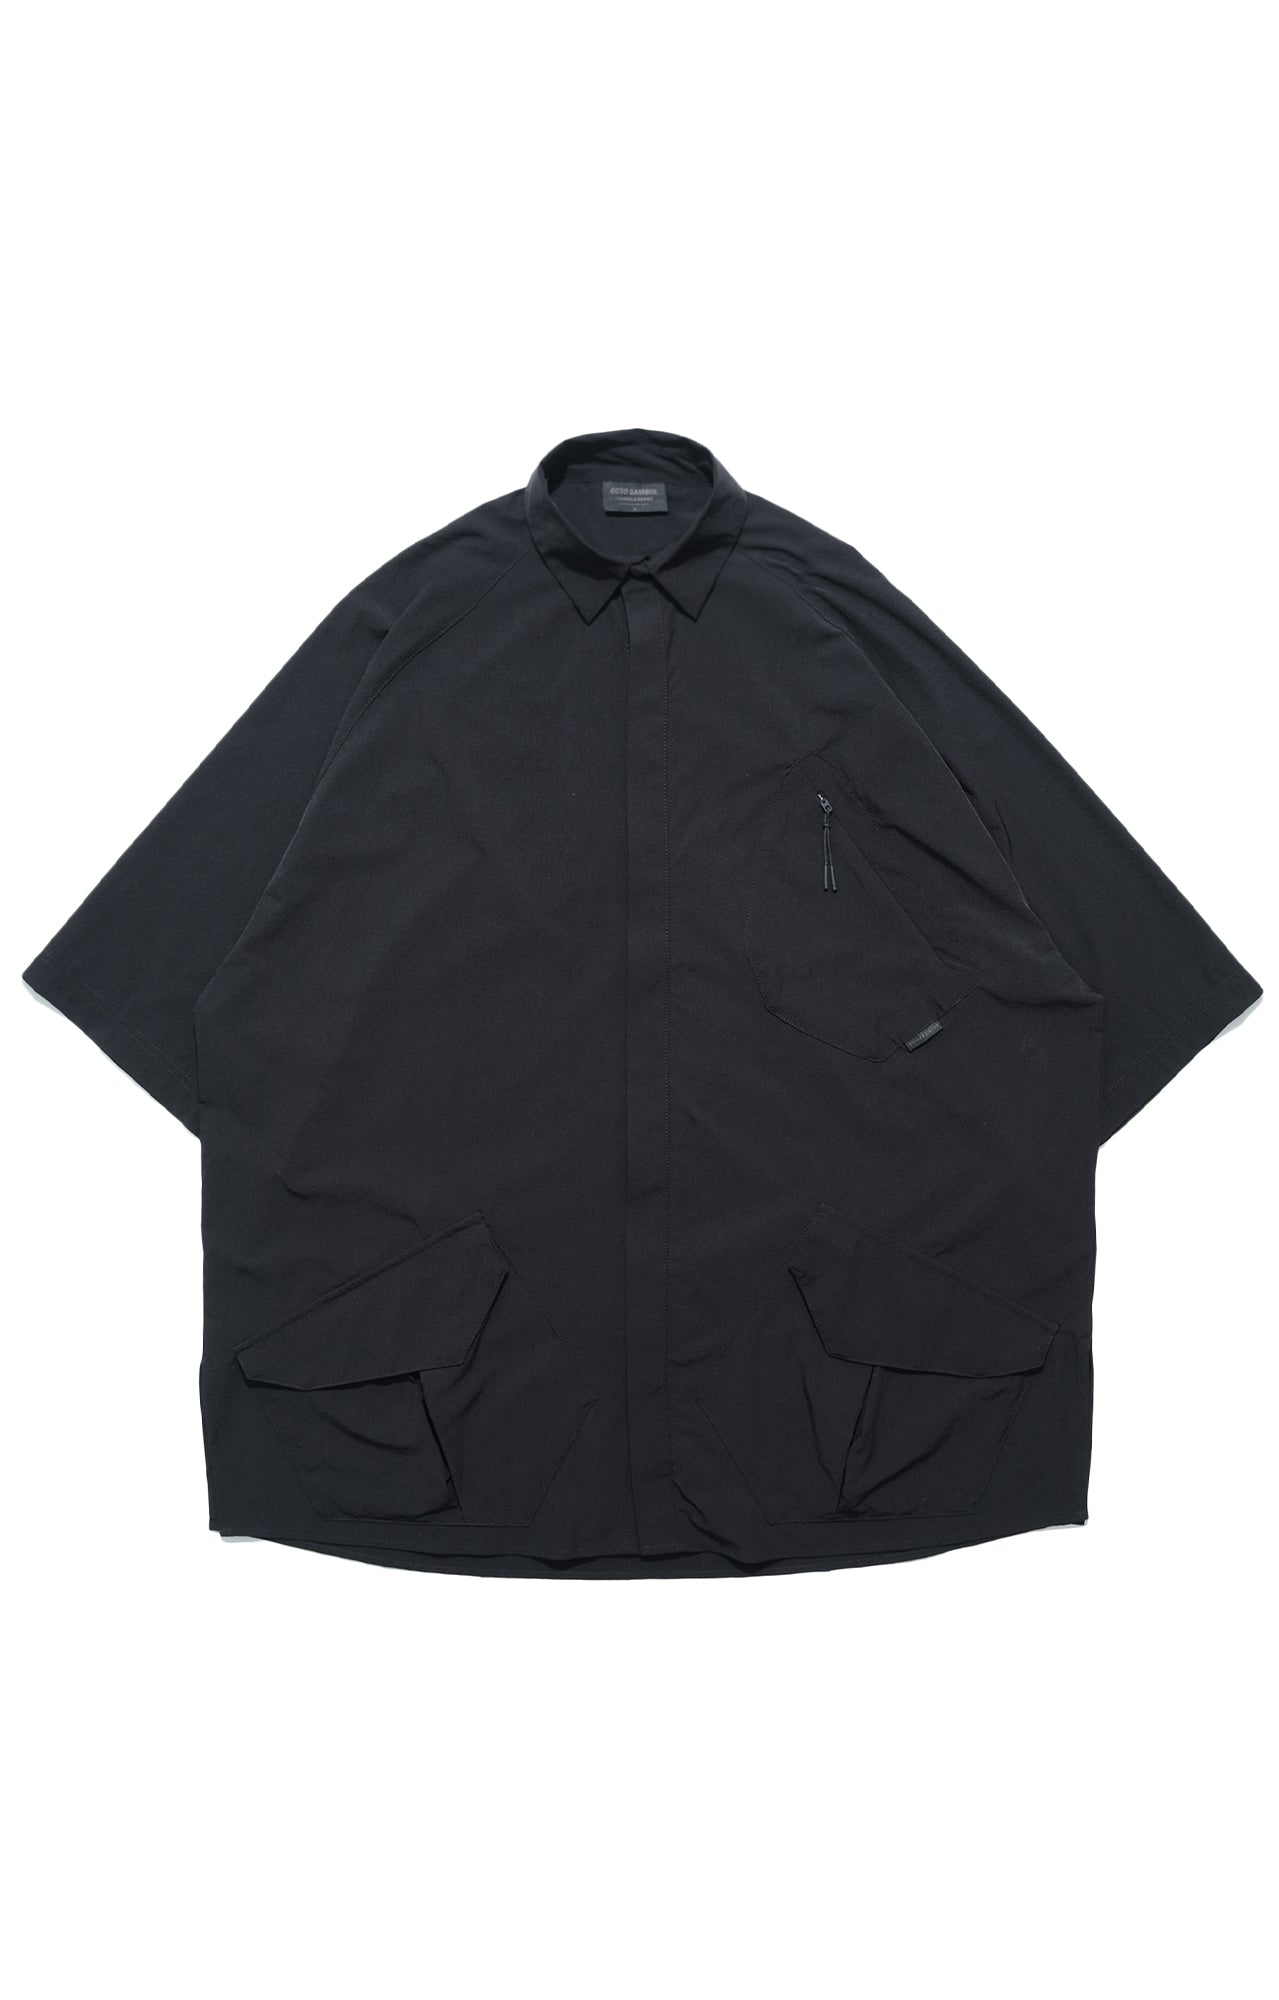 Capsule 01 / CT010 Nylon Pocket Shirt (Black) – OCTO GAMBOL